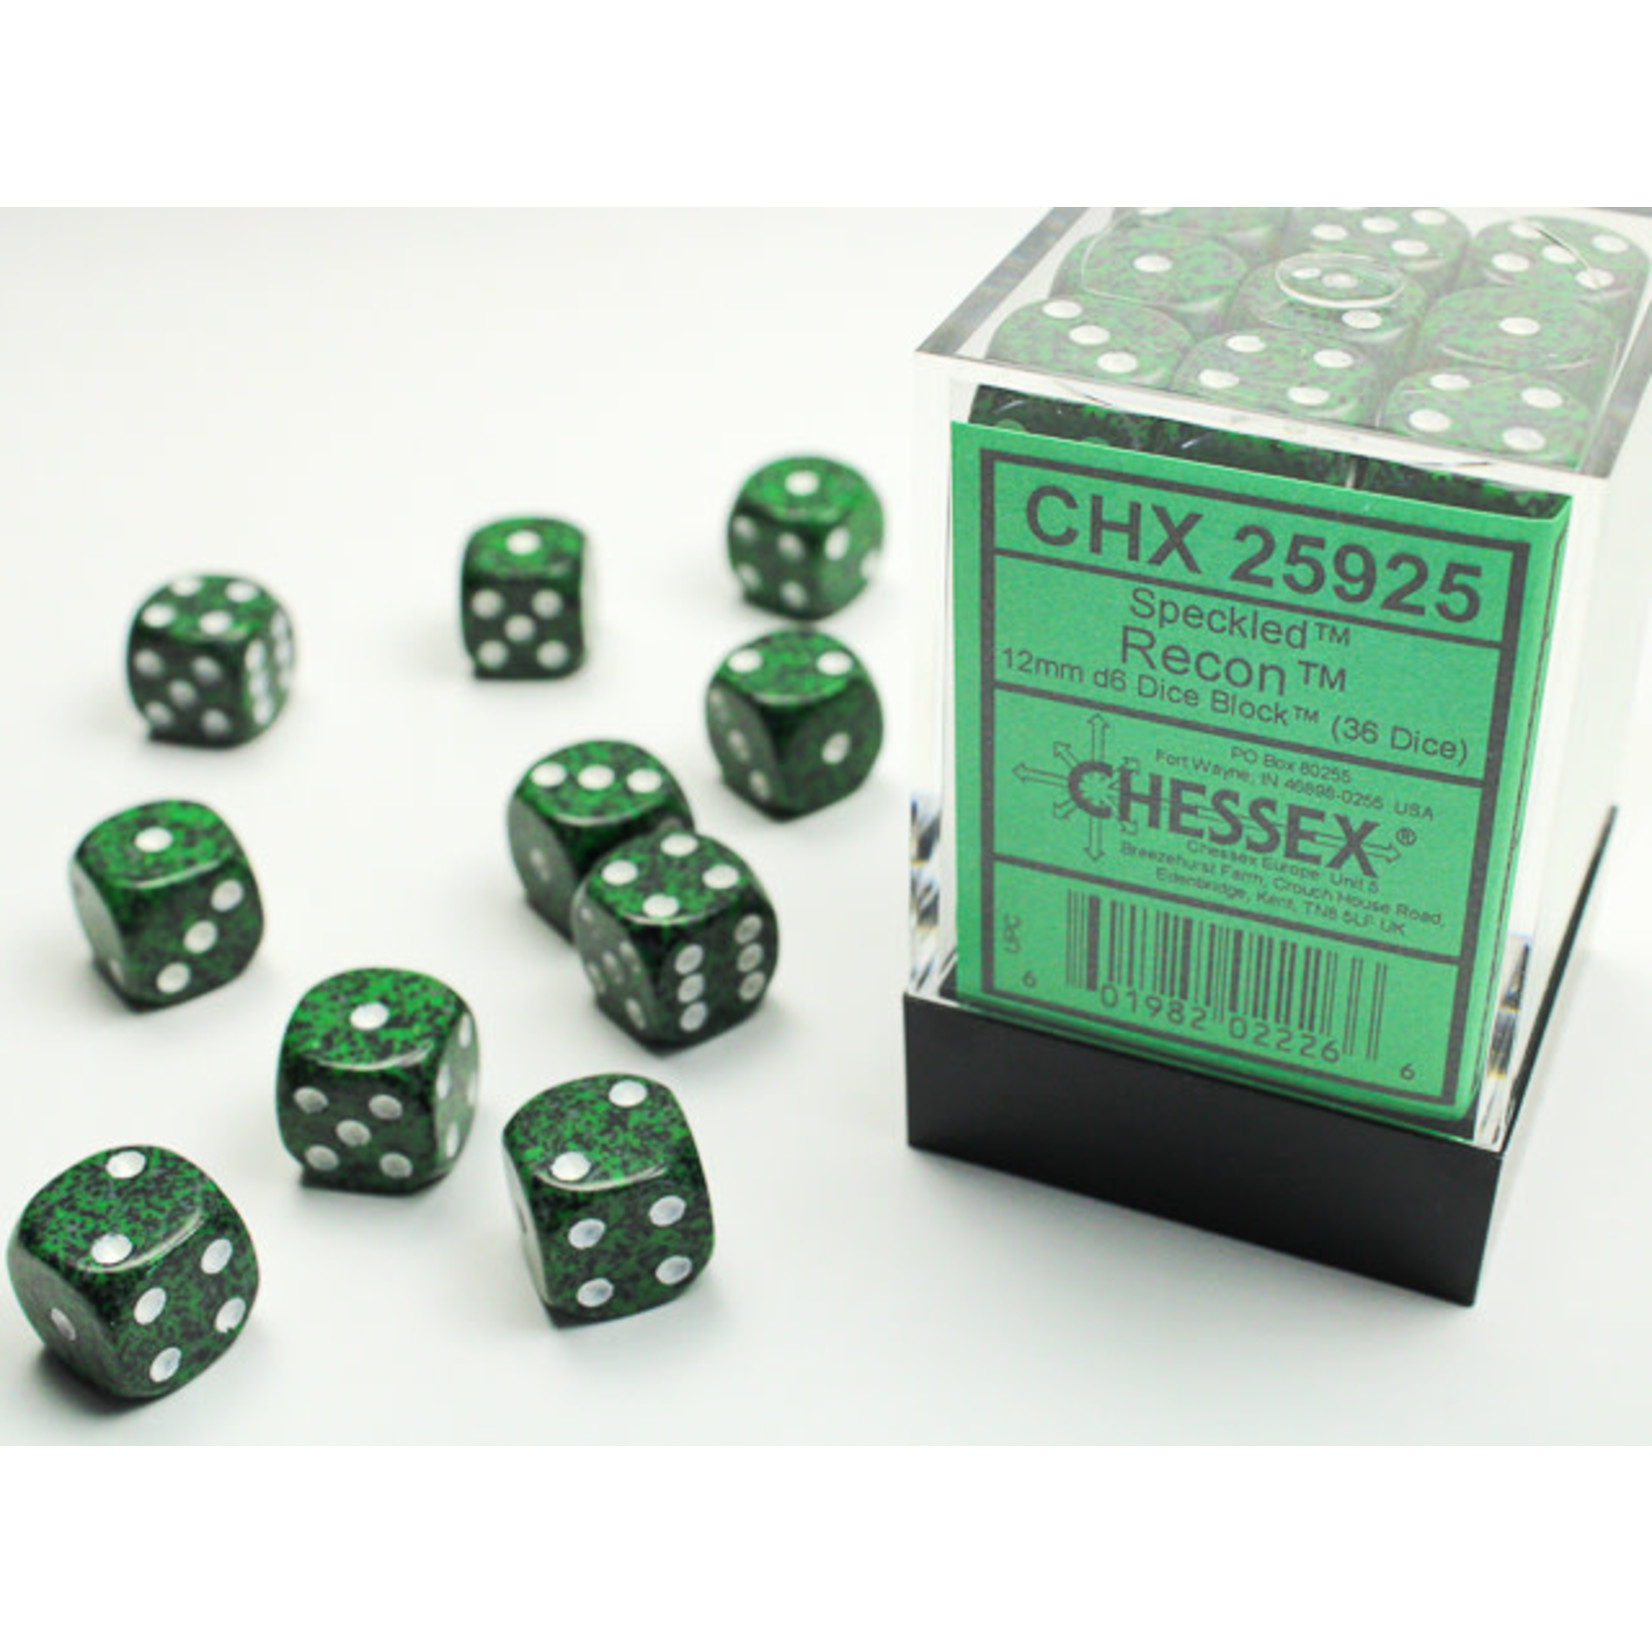 Chessex 25925 Speckled 36pc Recon Dice